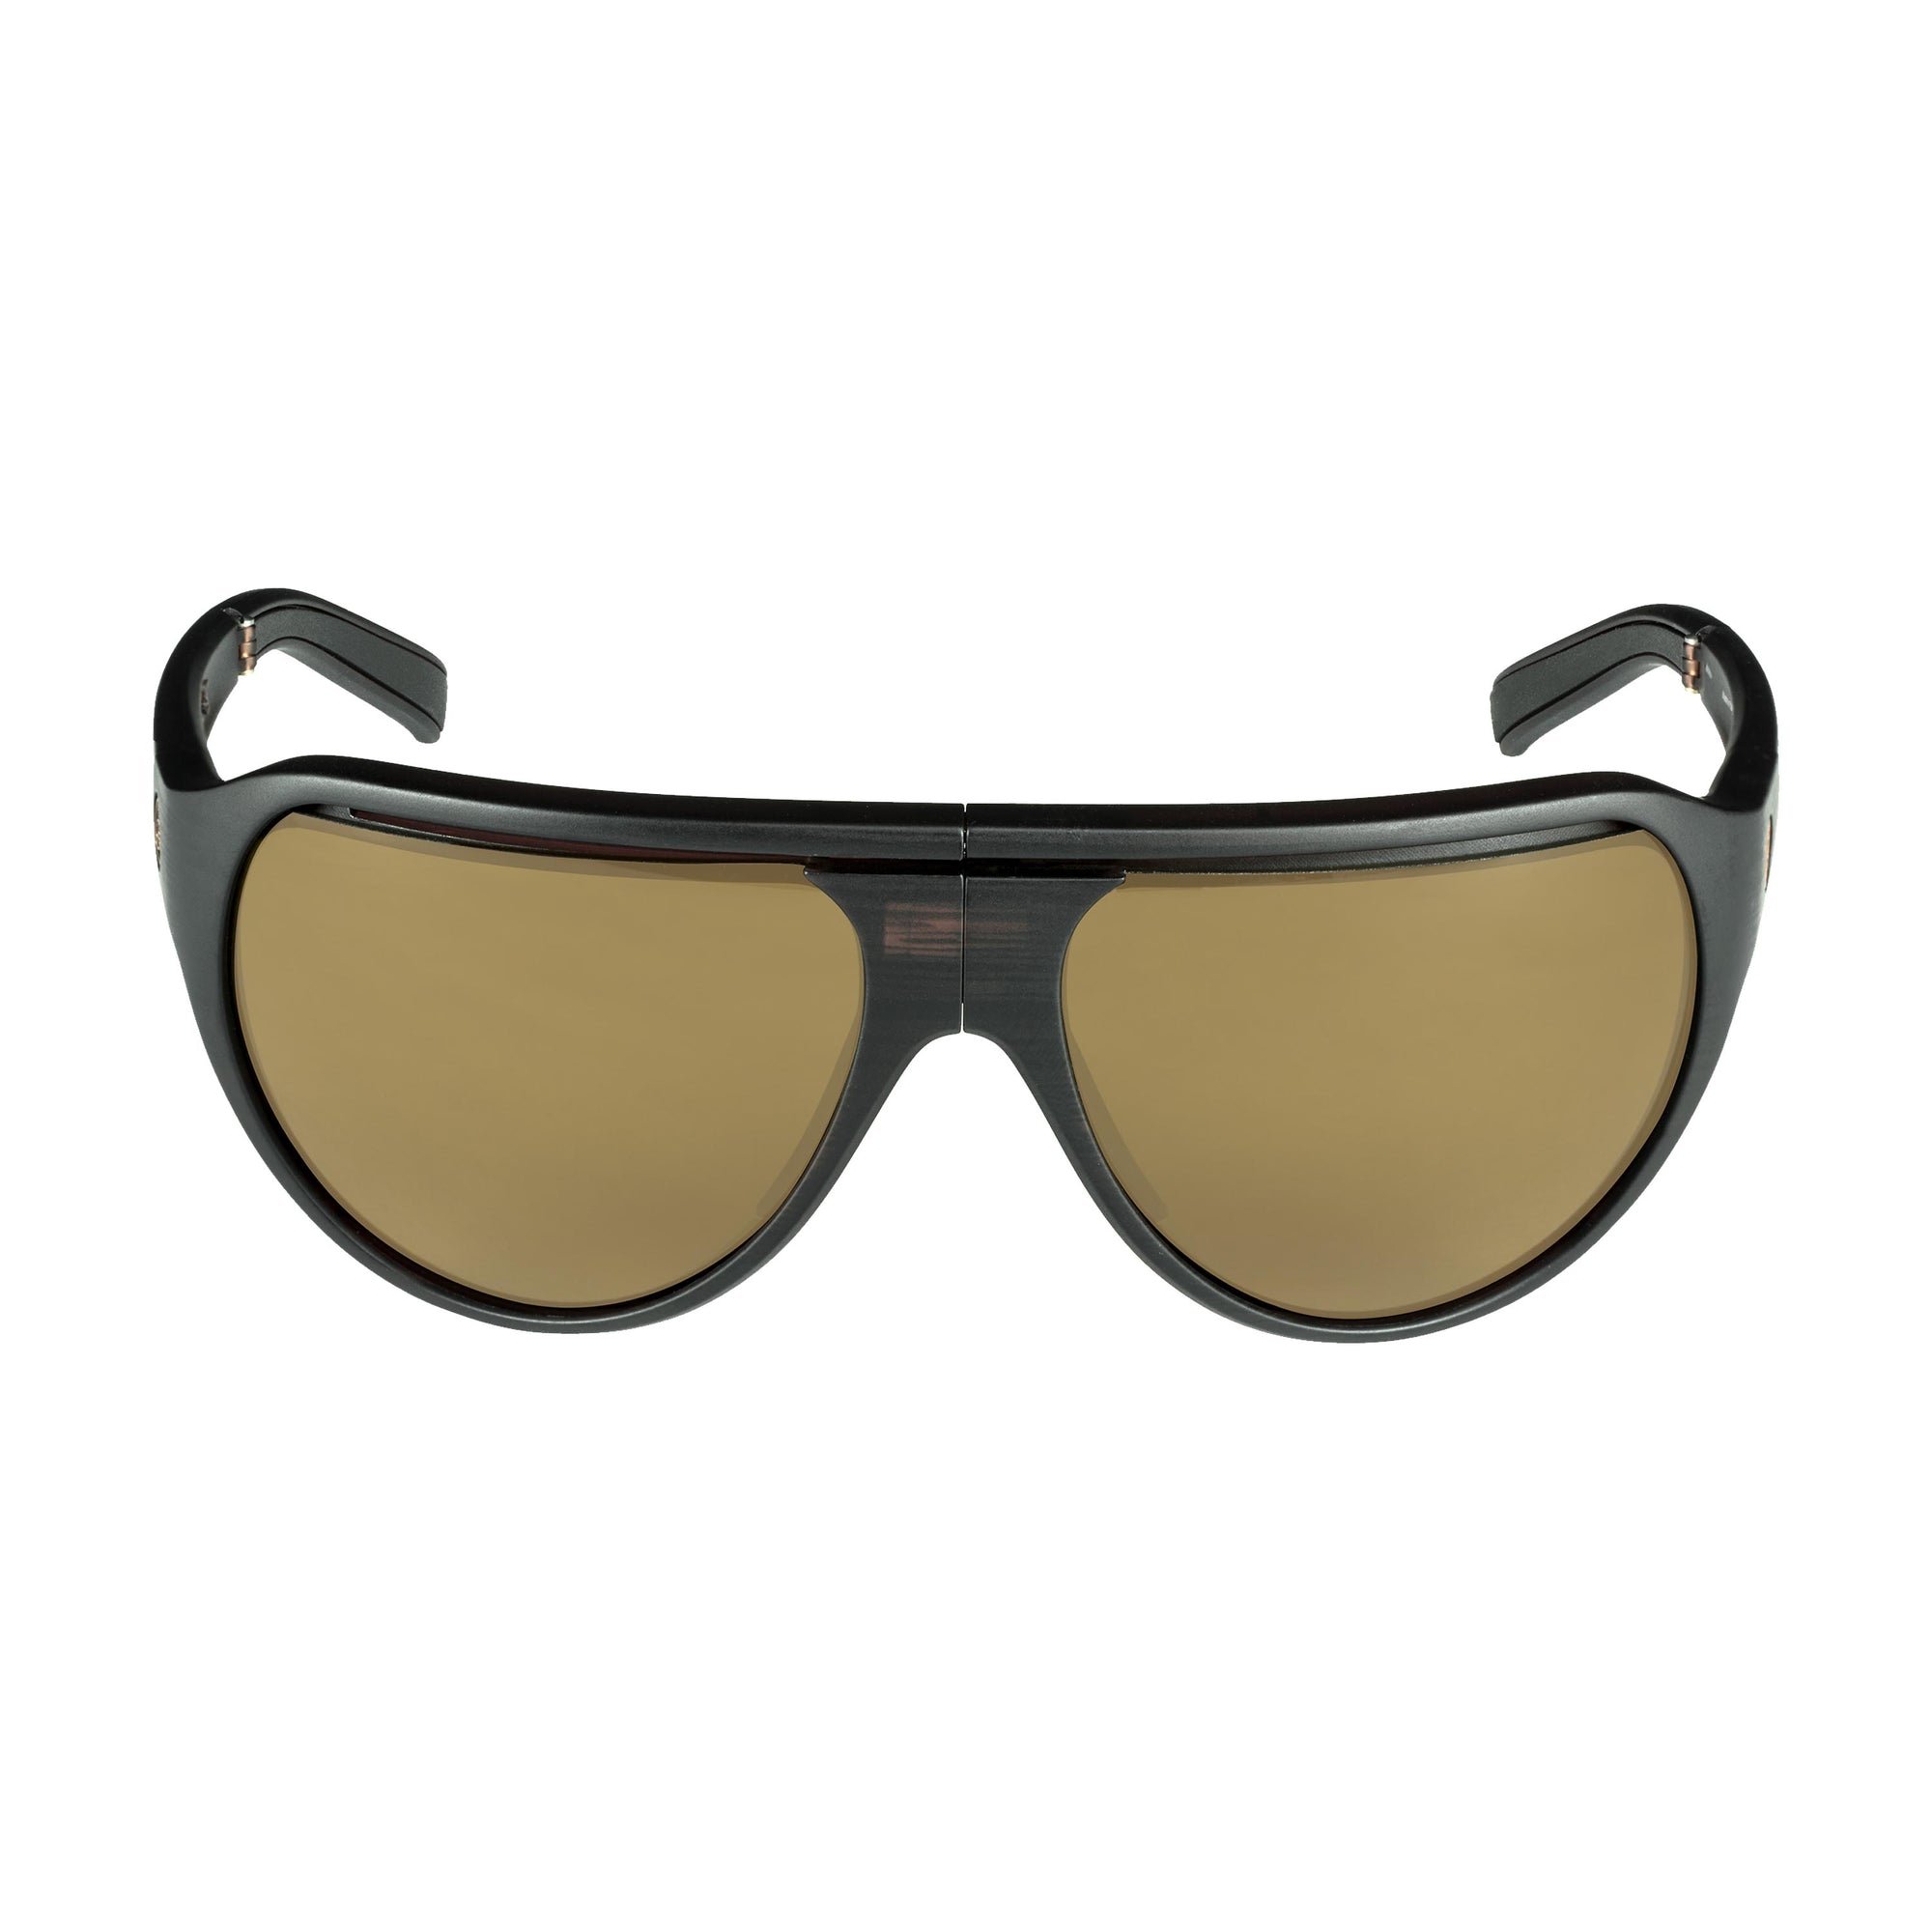 Popticals, Premium Compact Sunglasses, PopAir, 300010-DUNP, Polarized Sunglasses, Matte Driftwood Frame, Brown Lenses, Glam View